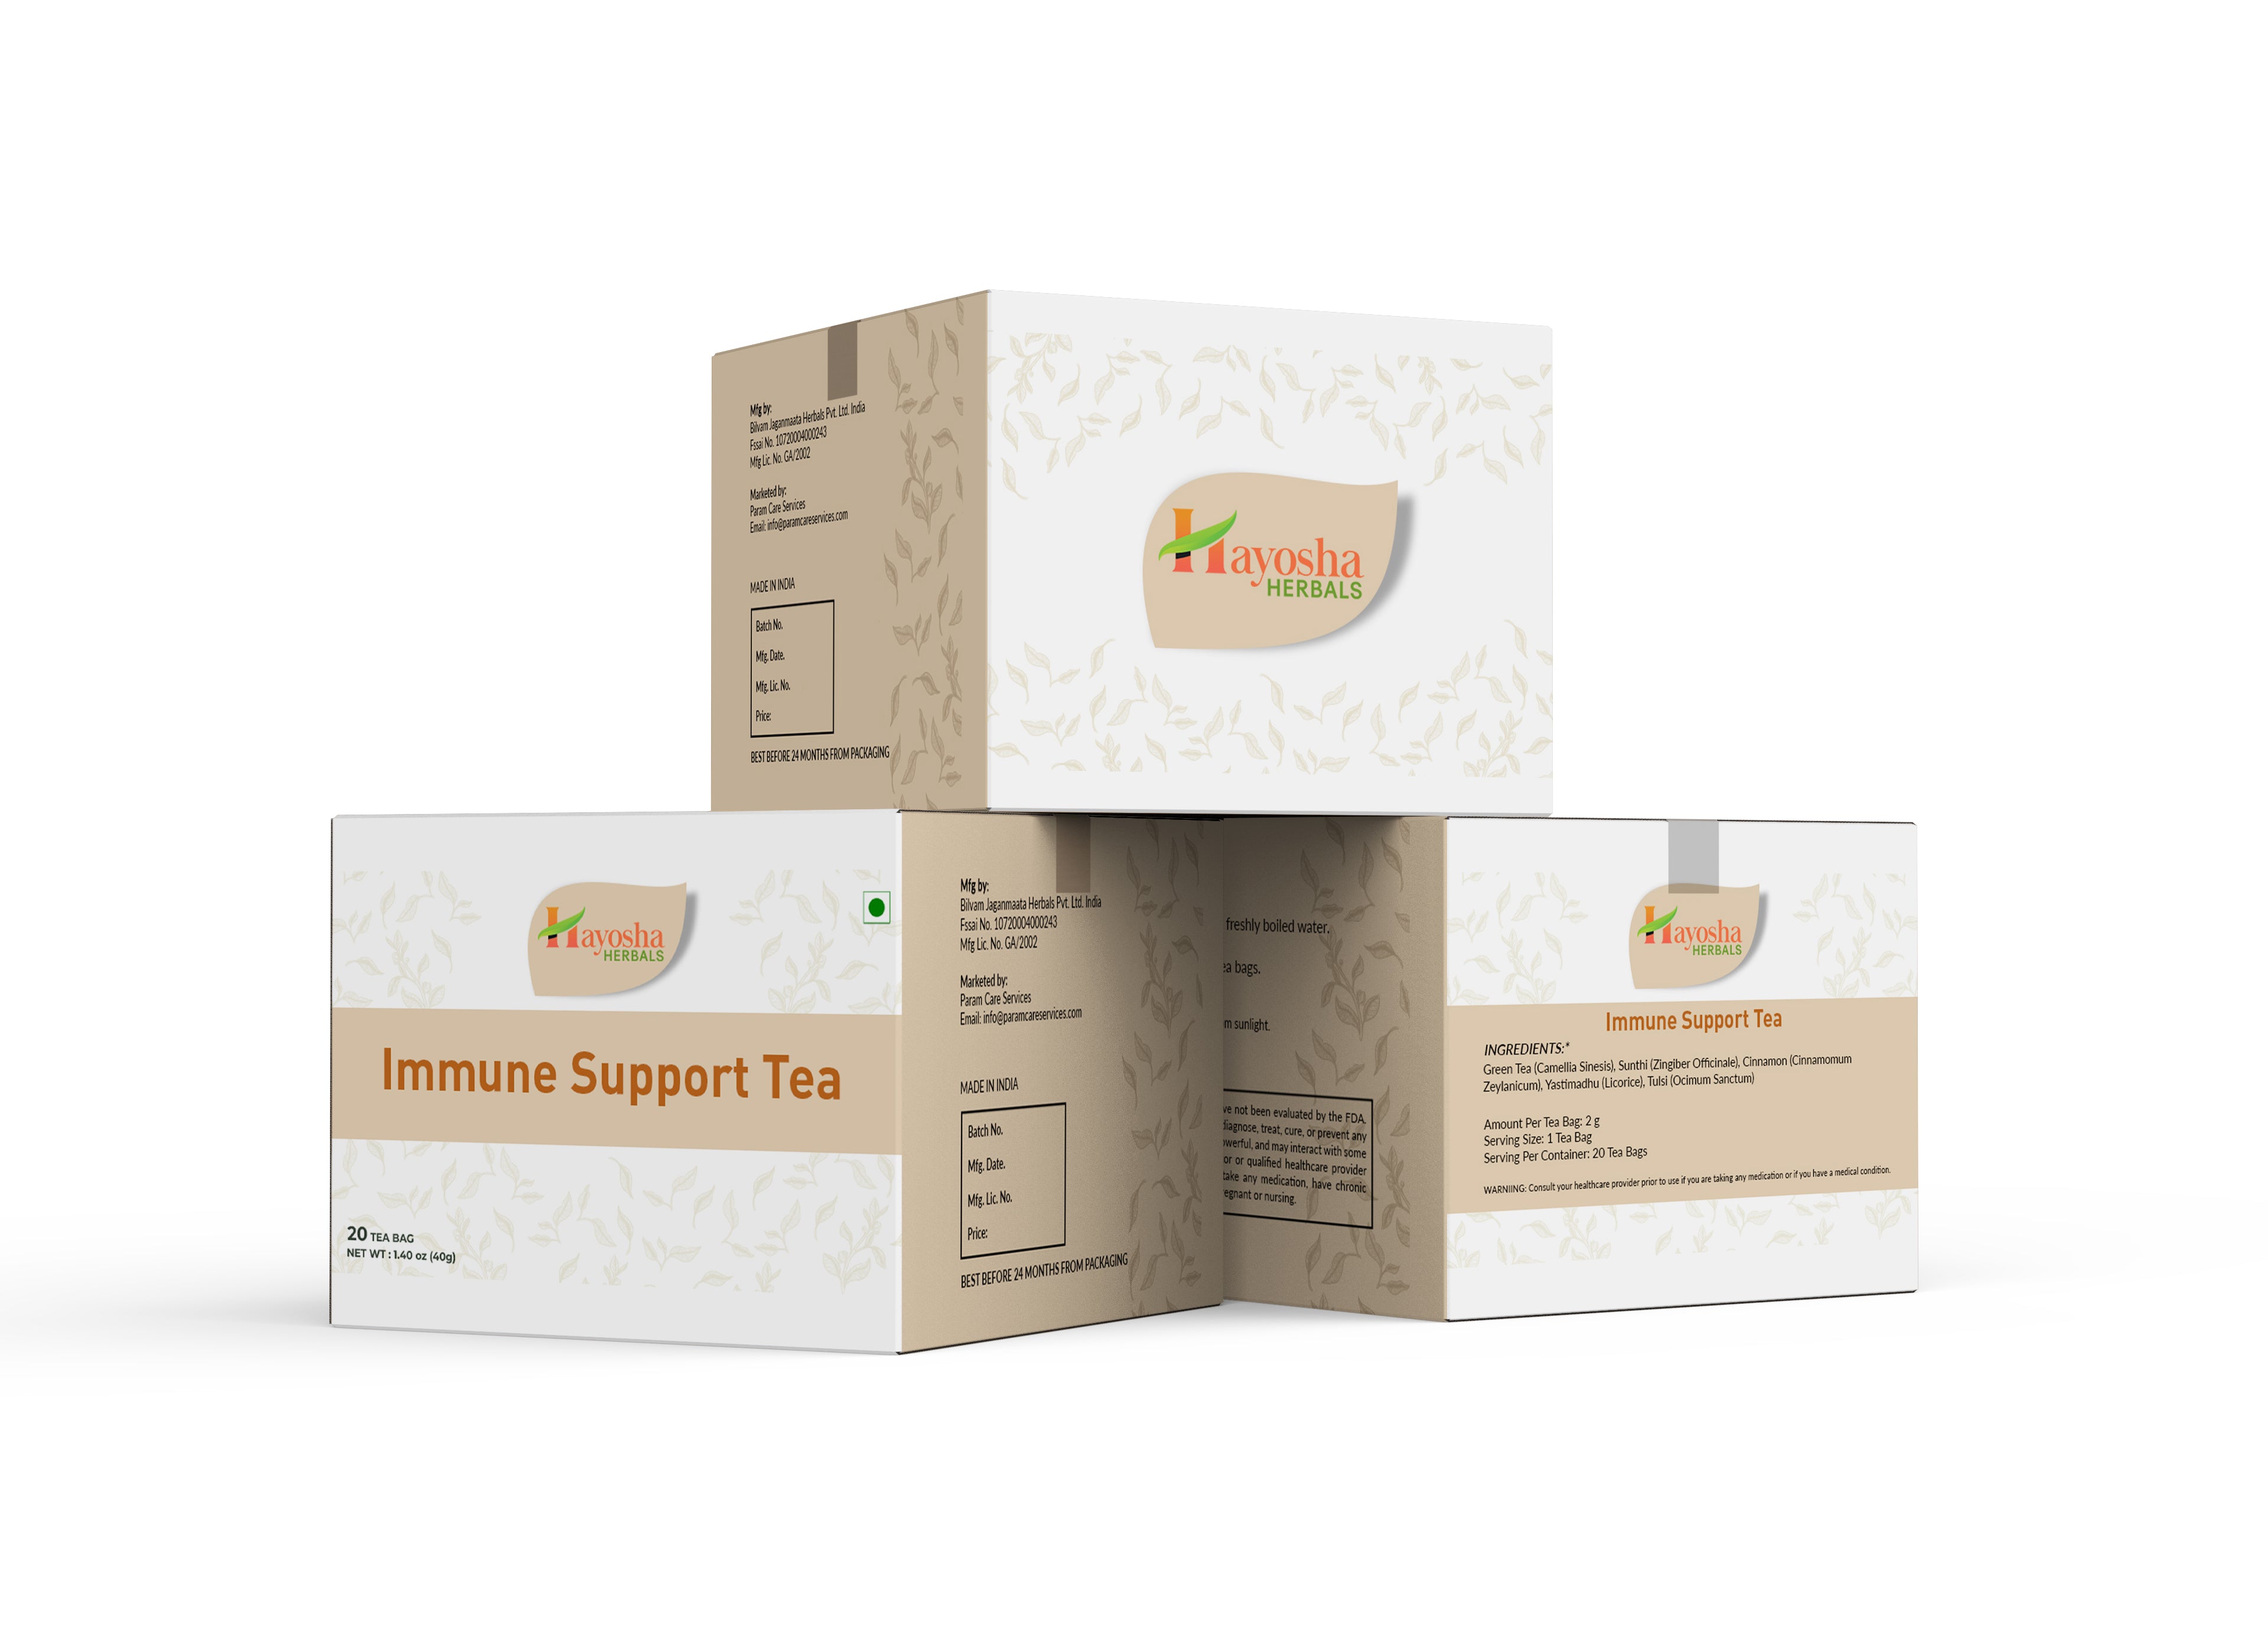 Hayosha Herbals - Immune Support Tea